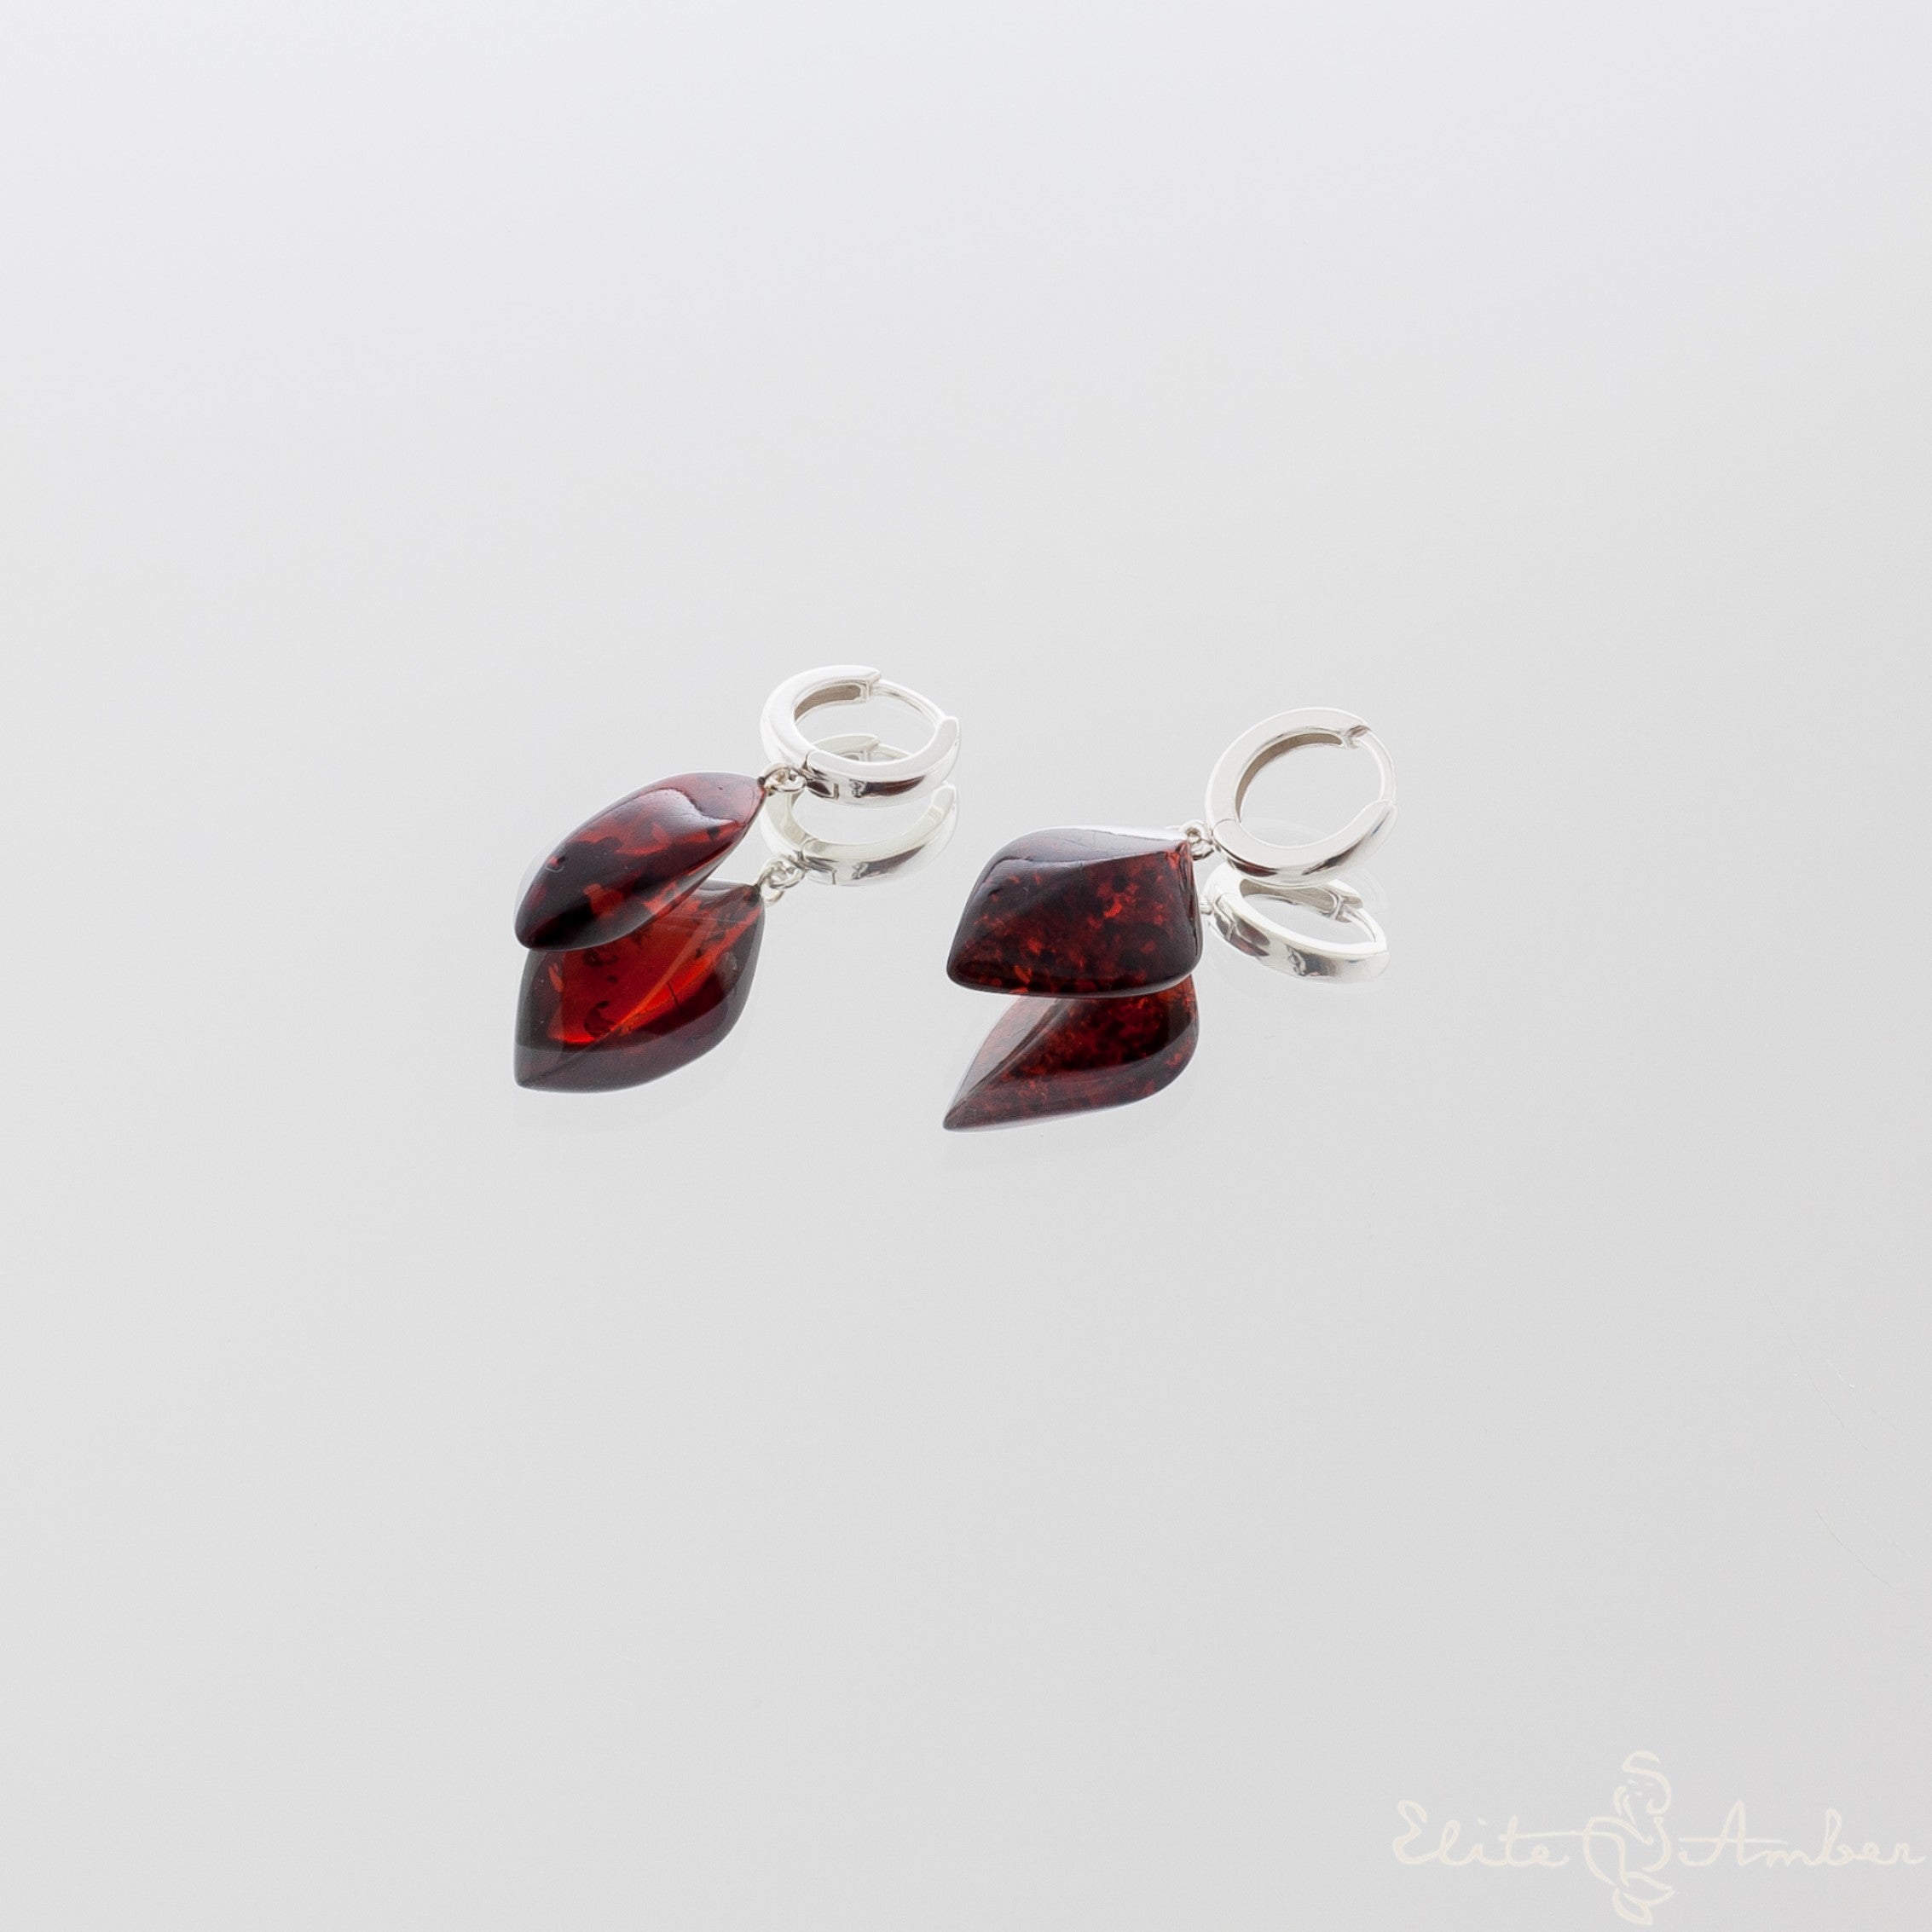 Amber earrings "Cherry leafs"